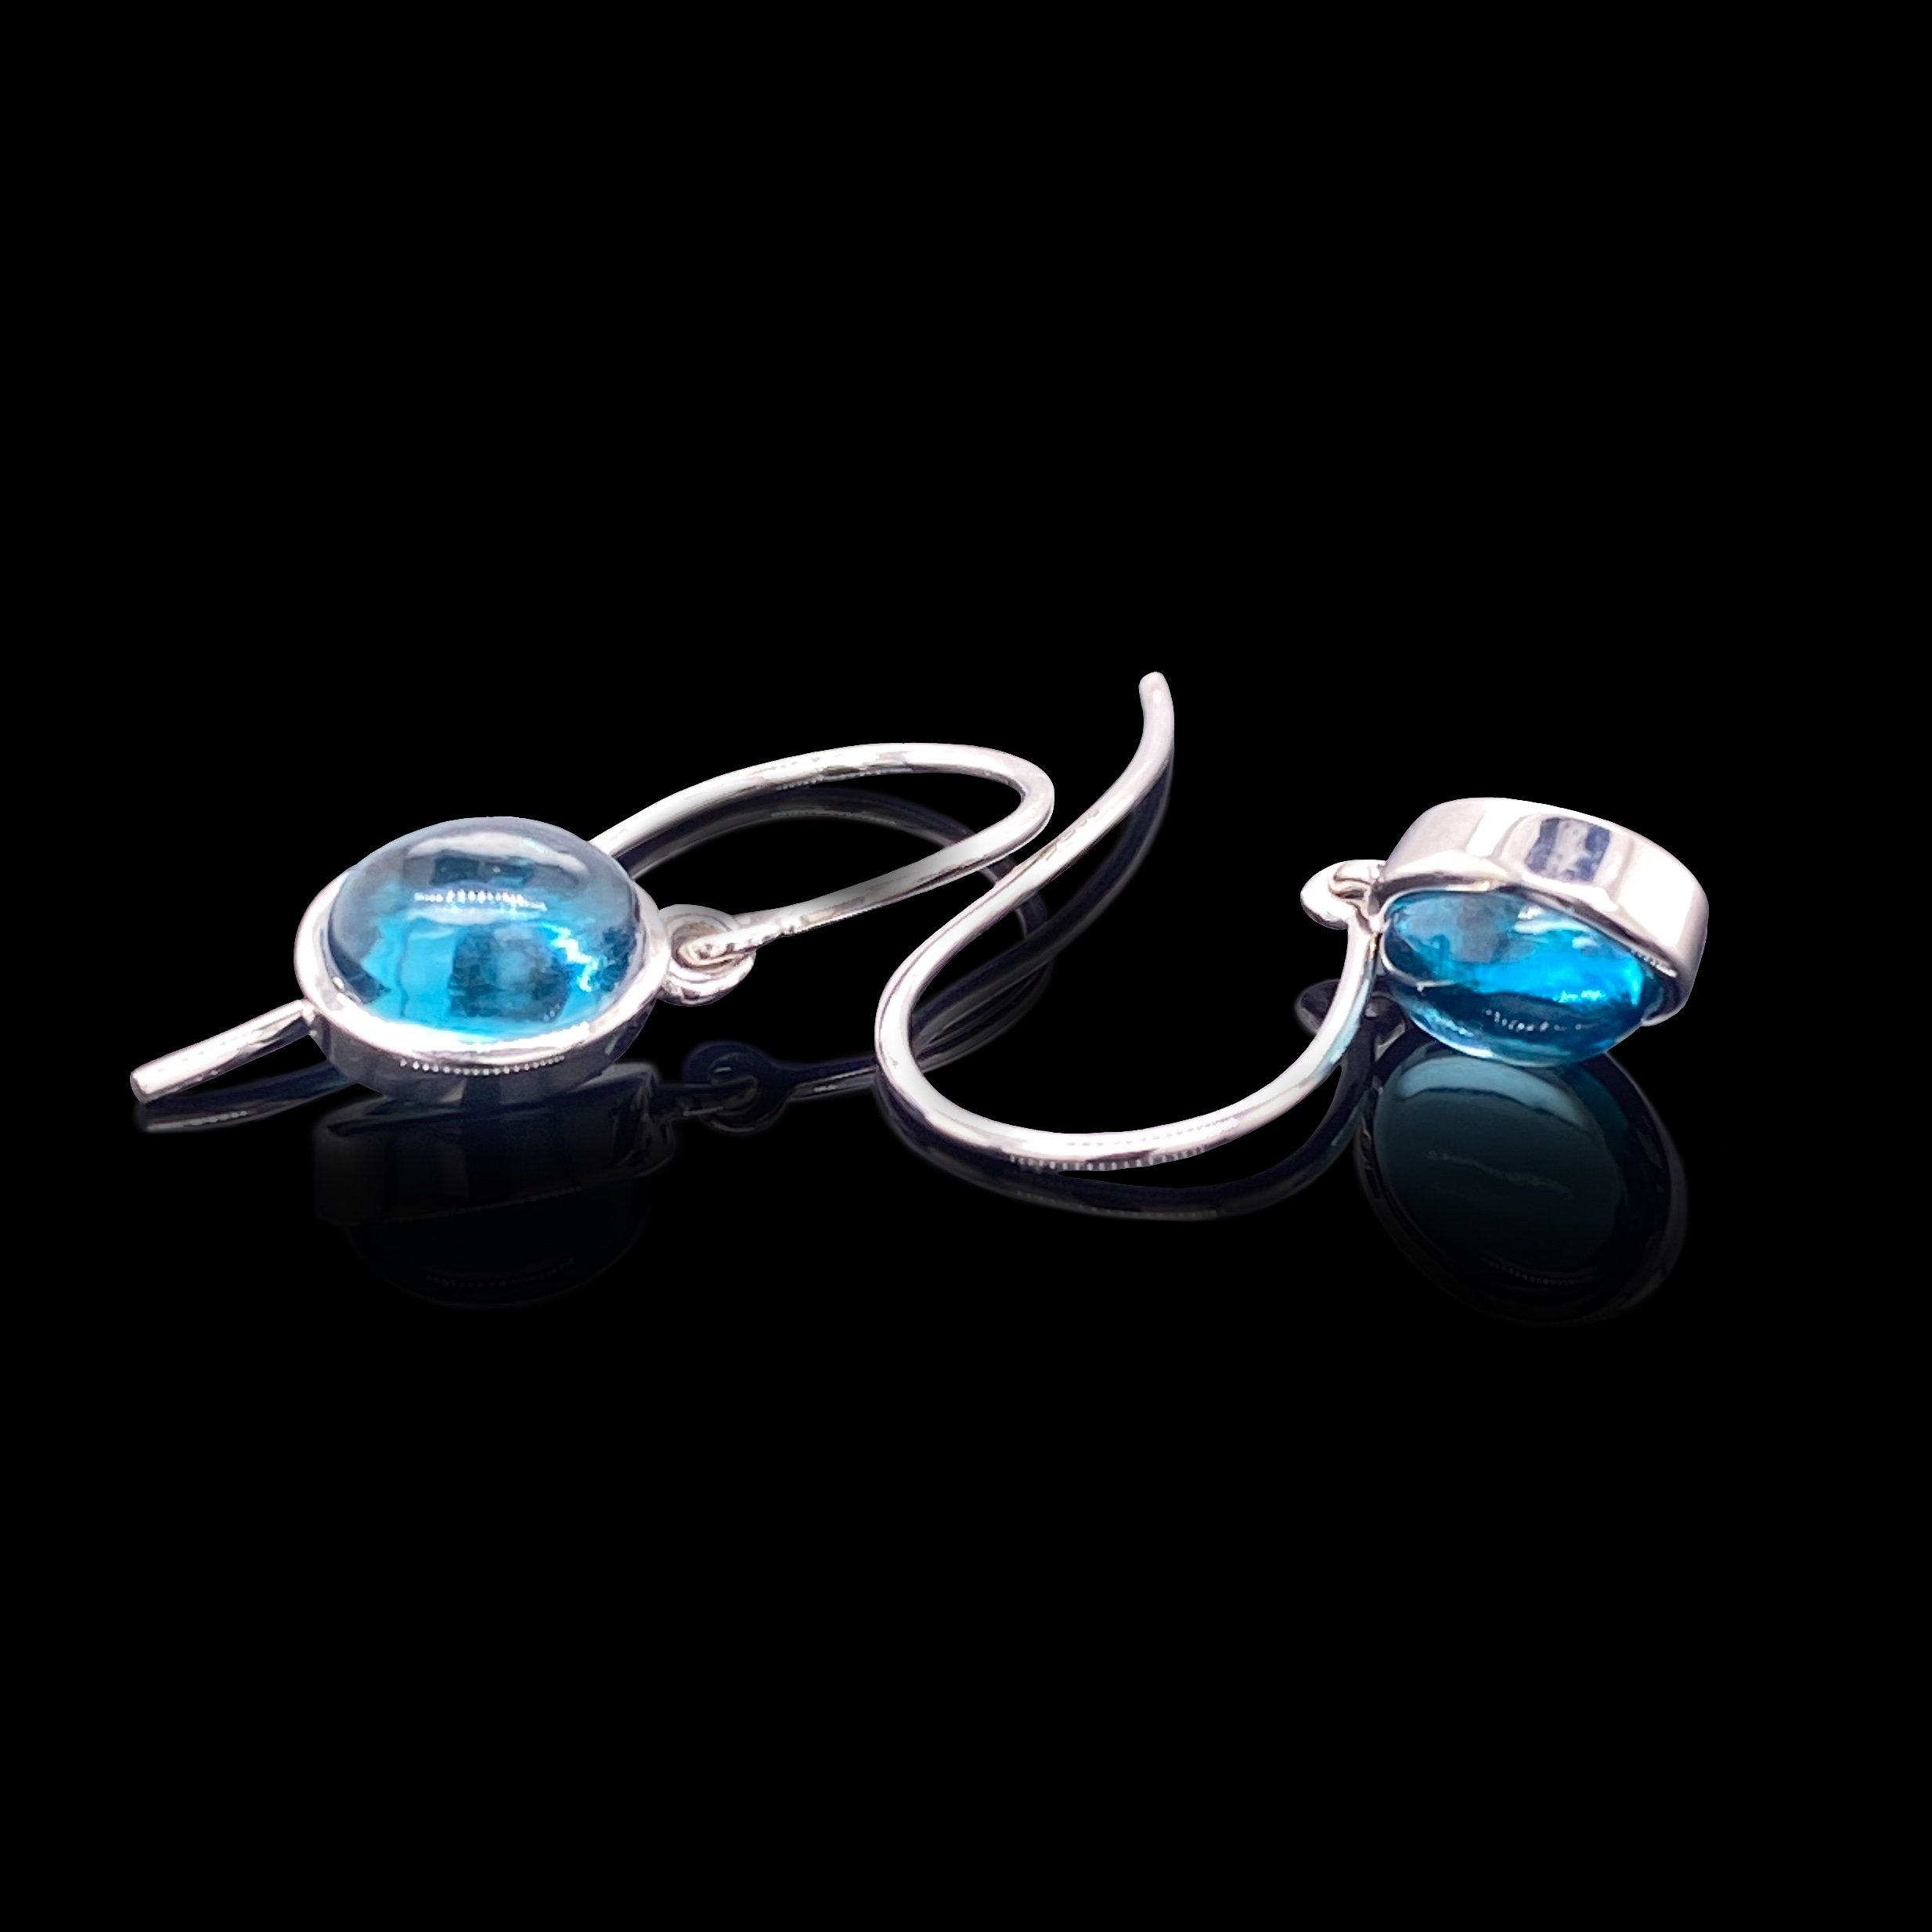 Elegant Blue Topaz Drop Earrings by Heidi Kjeldsen Jewellers ER2509 on black